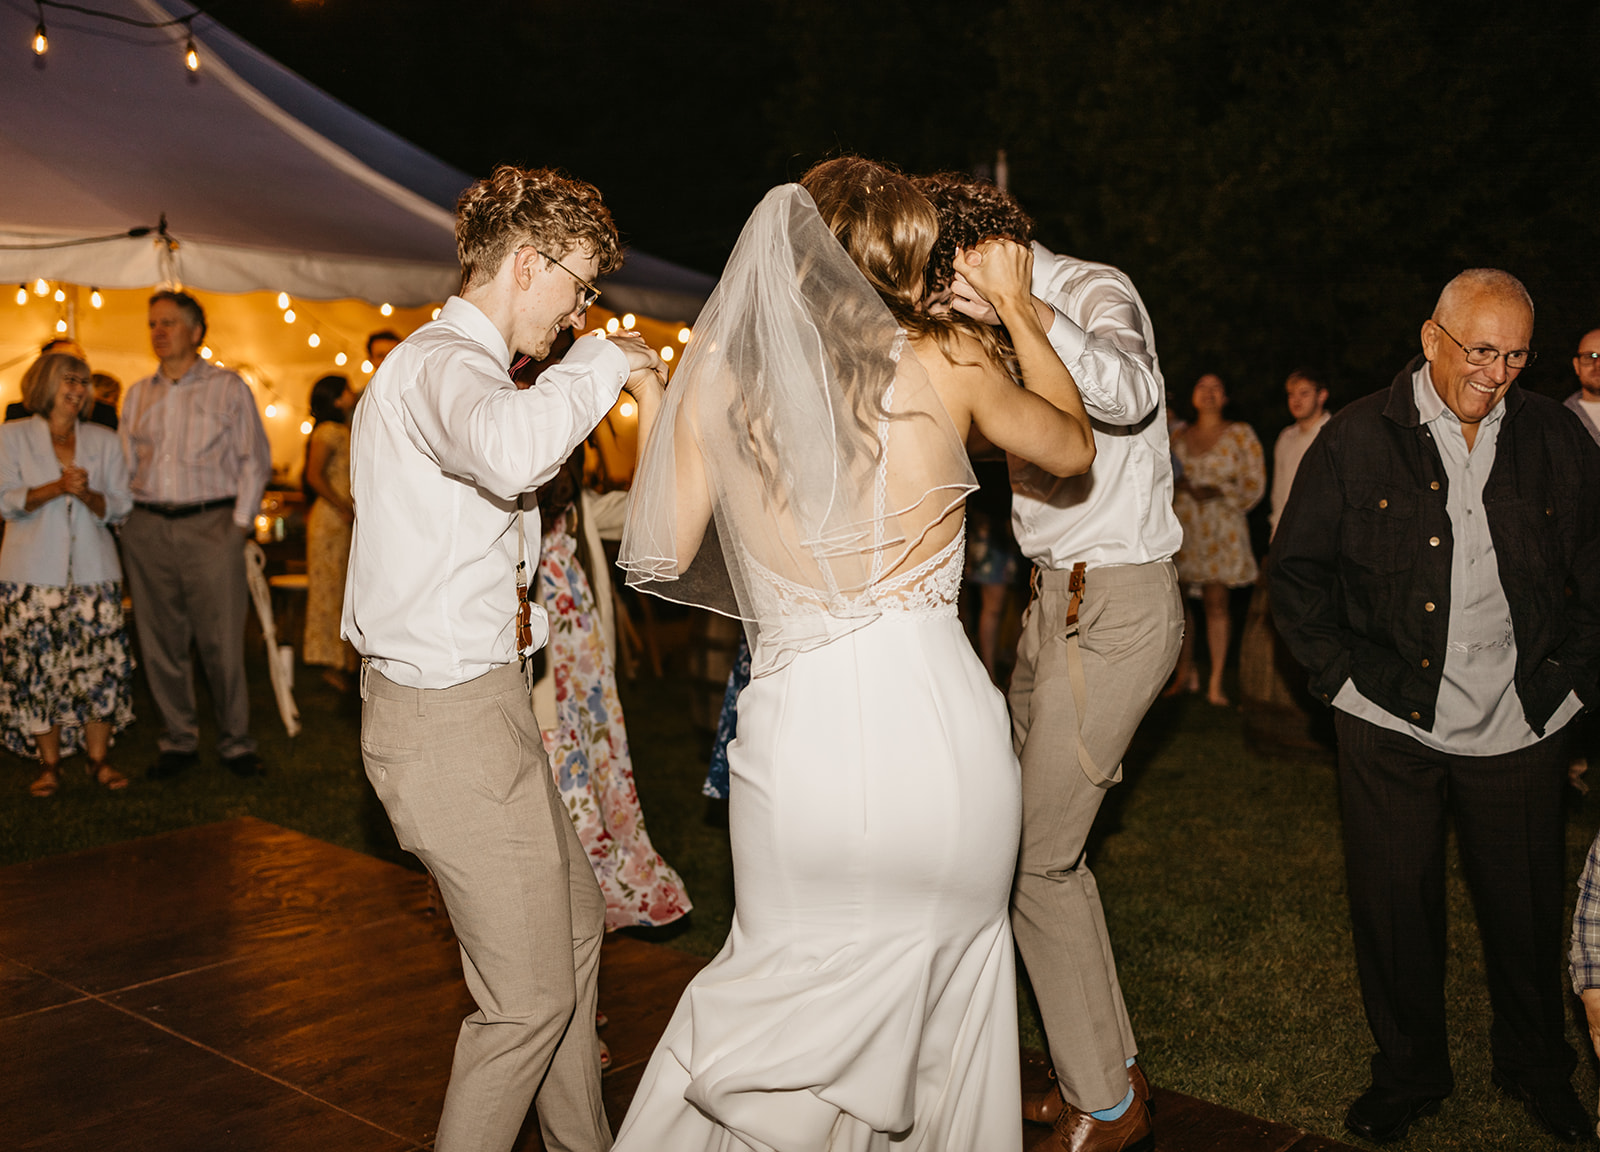 Maddie Lymburner and Chris Hartwig dancing at their wedding reception